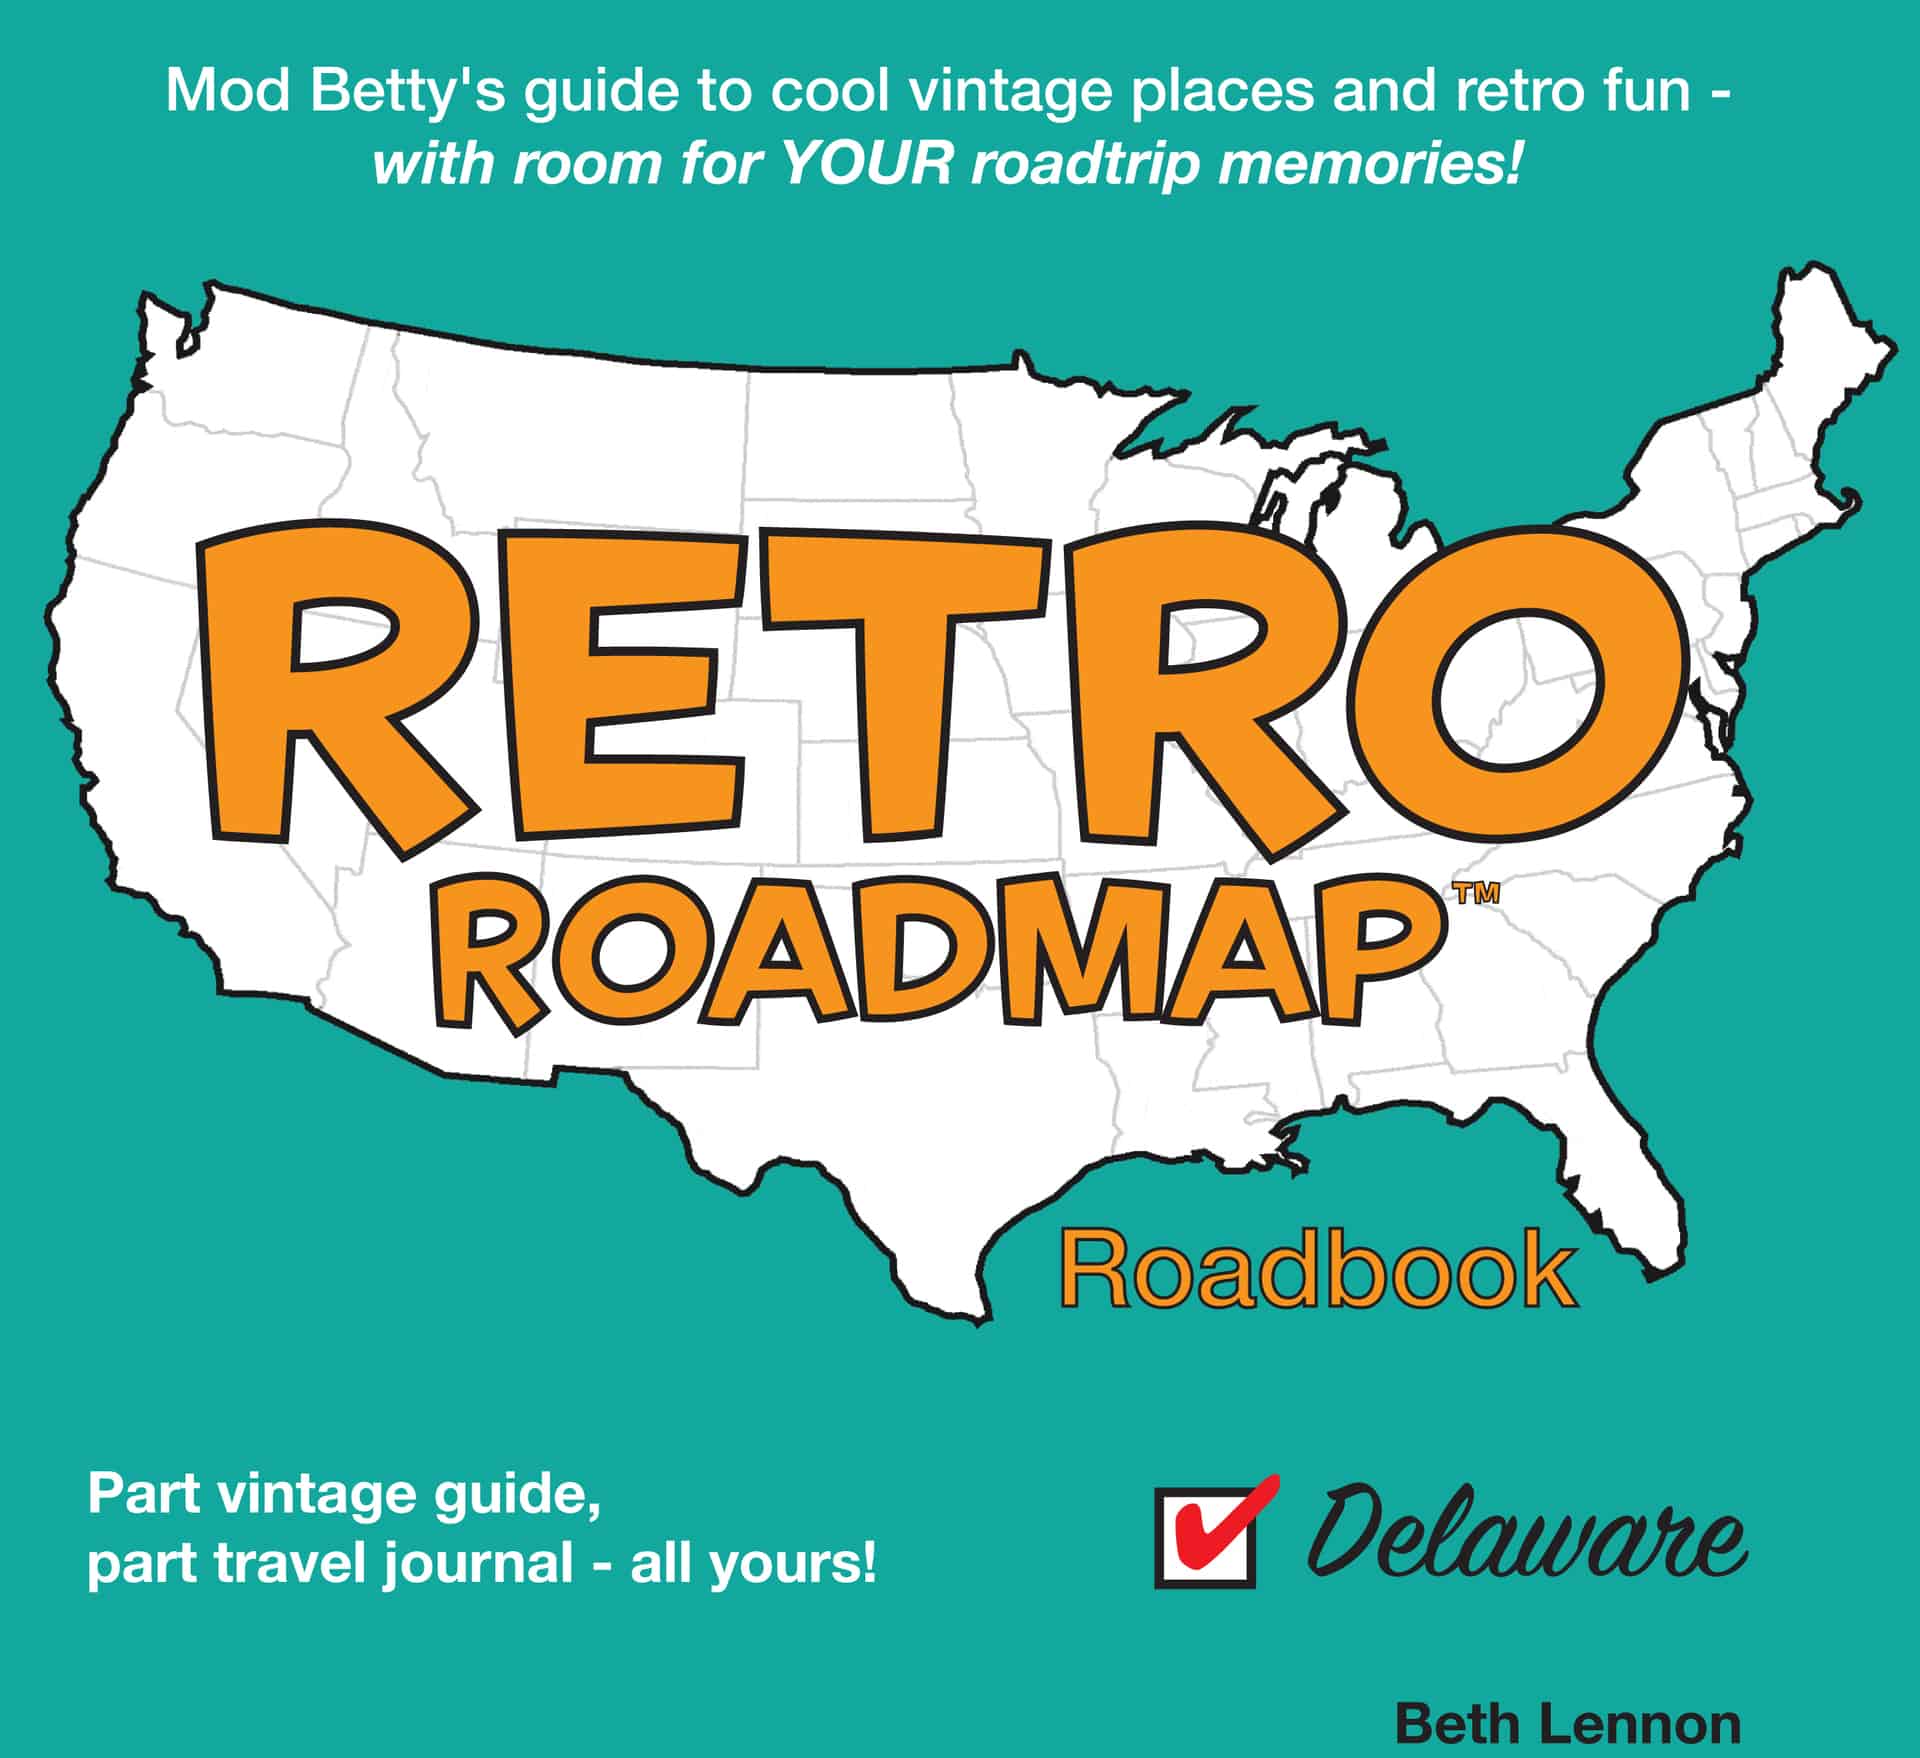 Retro Roadmap Roadbook Book Cover - Mod Betty - RetroRoadmap.com